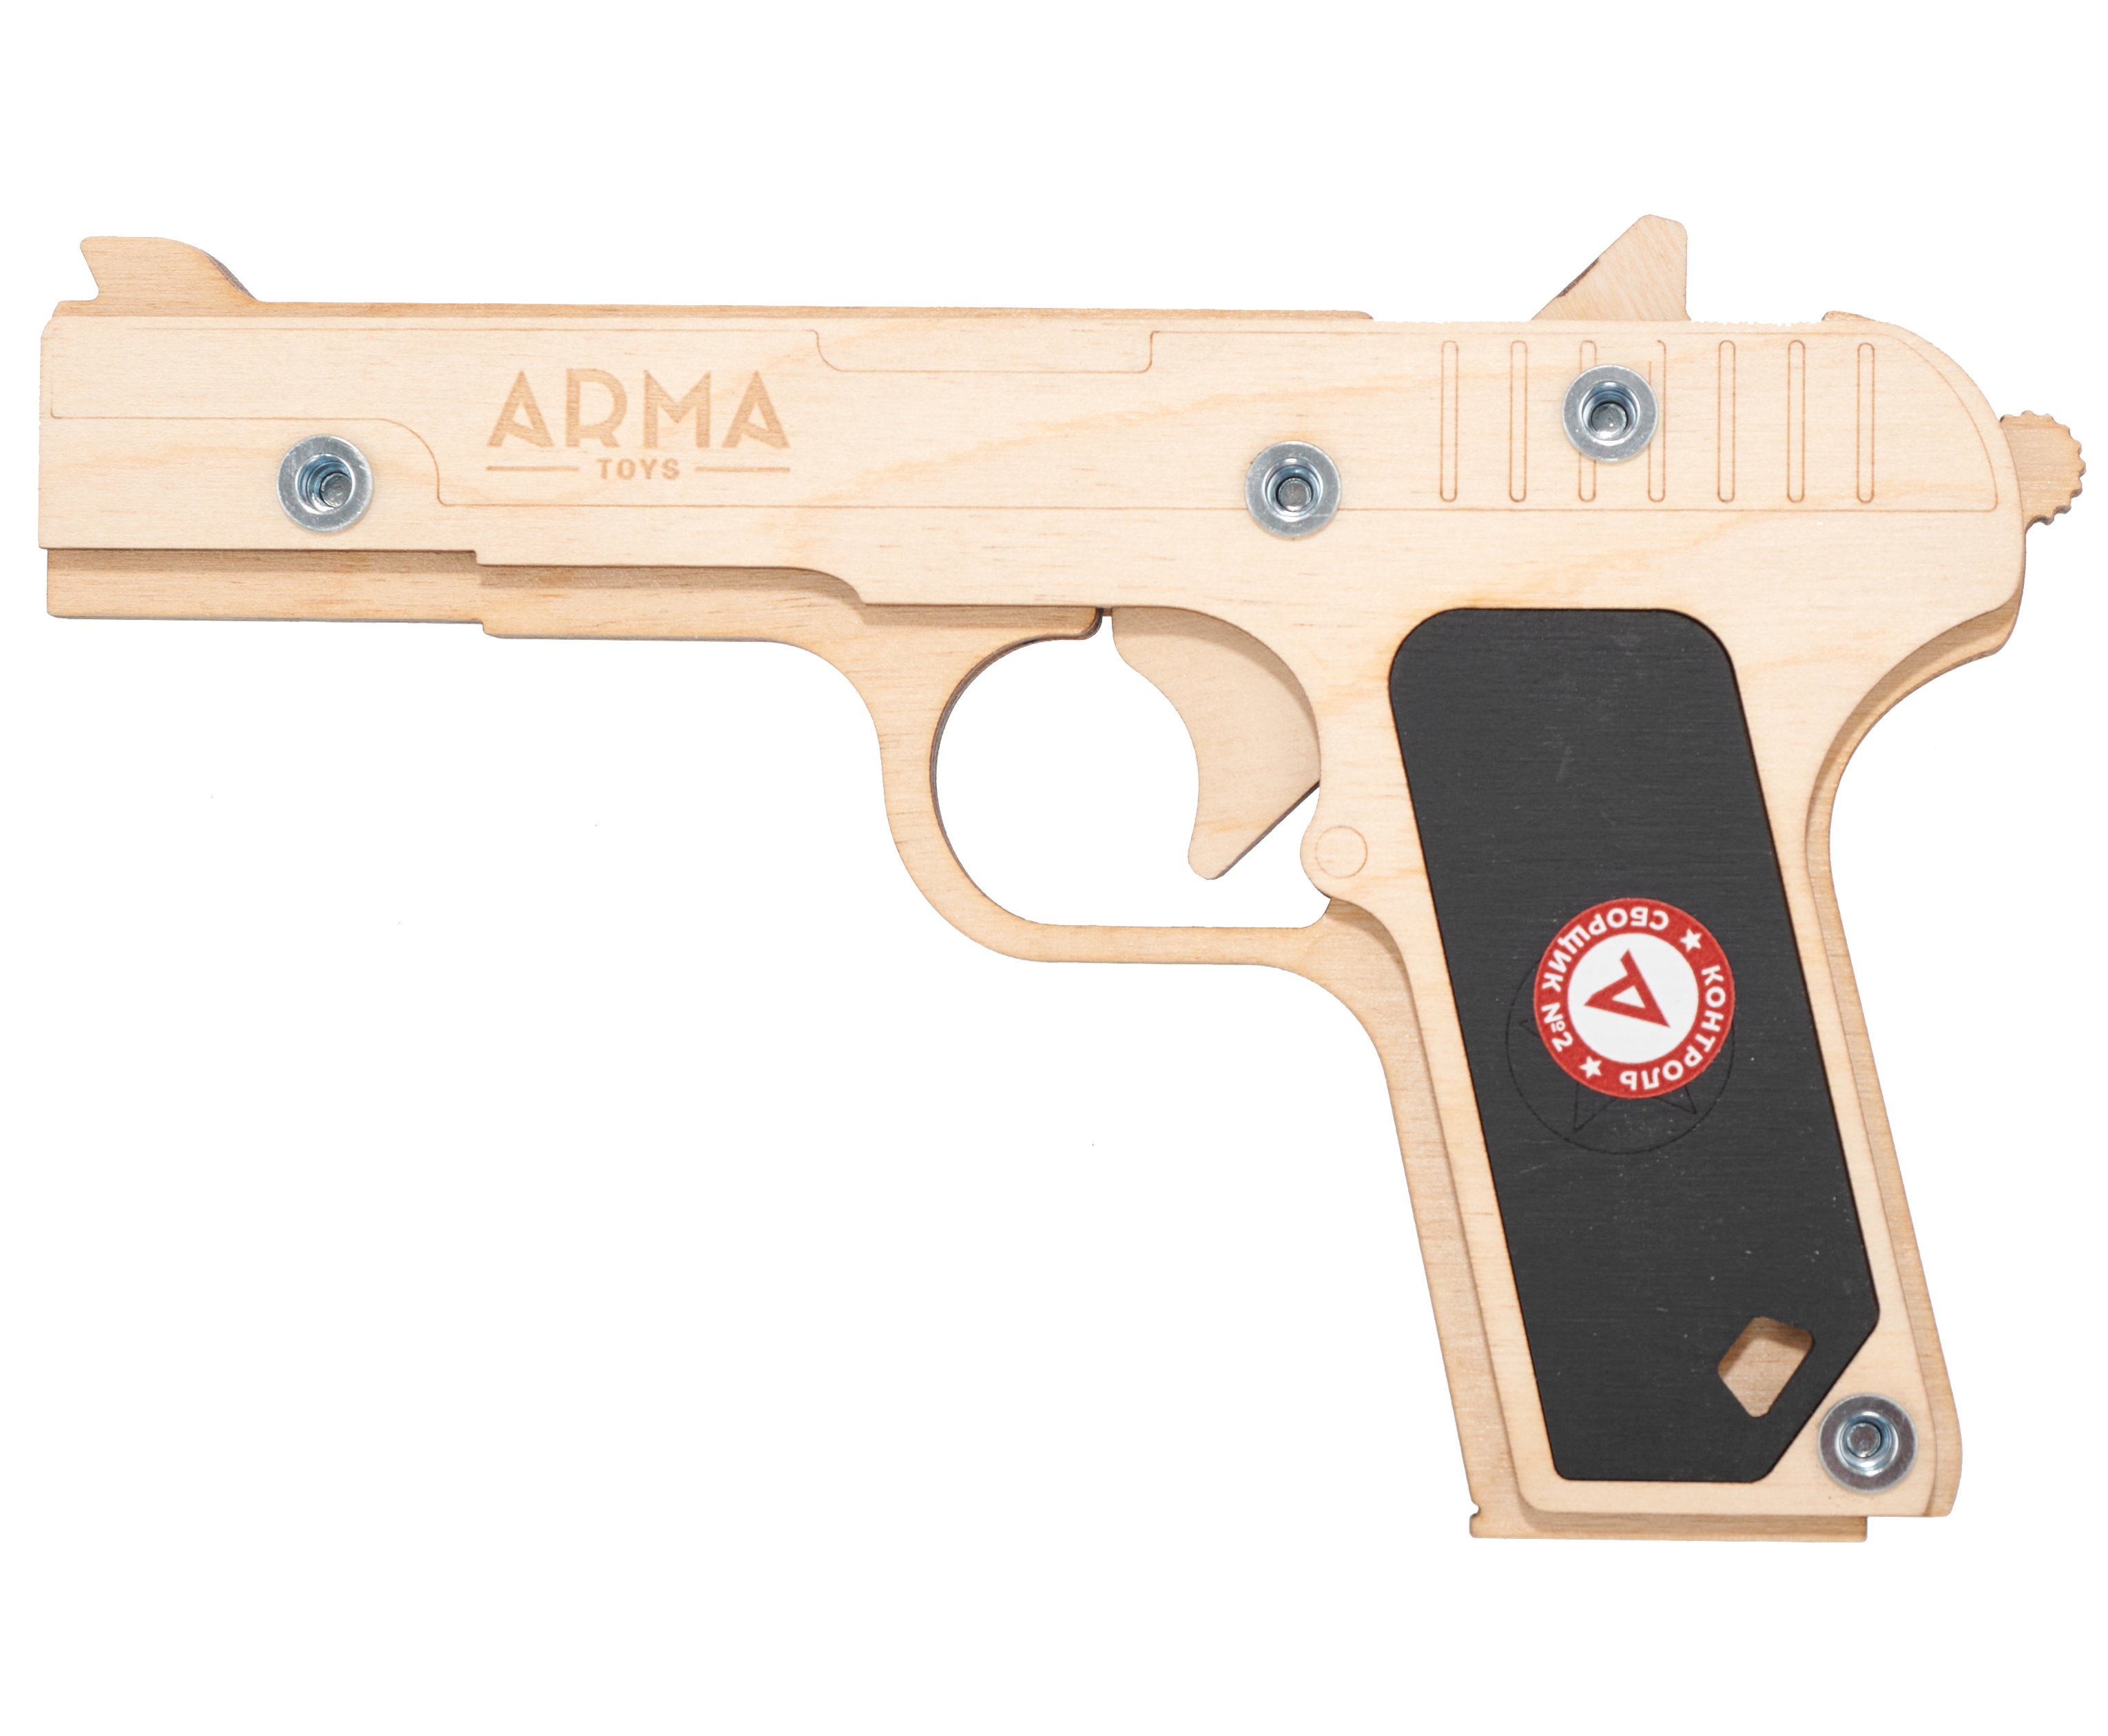 Резинкострел игрушечный Arma toys пистолет ТТ Компакт макет, Токарев, ATL002 резинкострел arma toys пистолет glock макет compact atl001